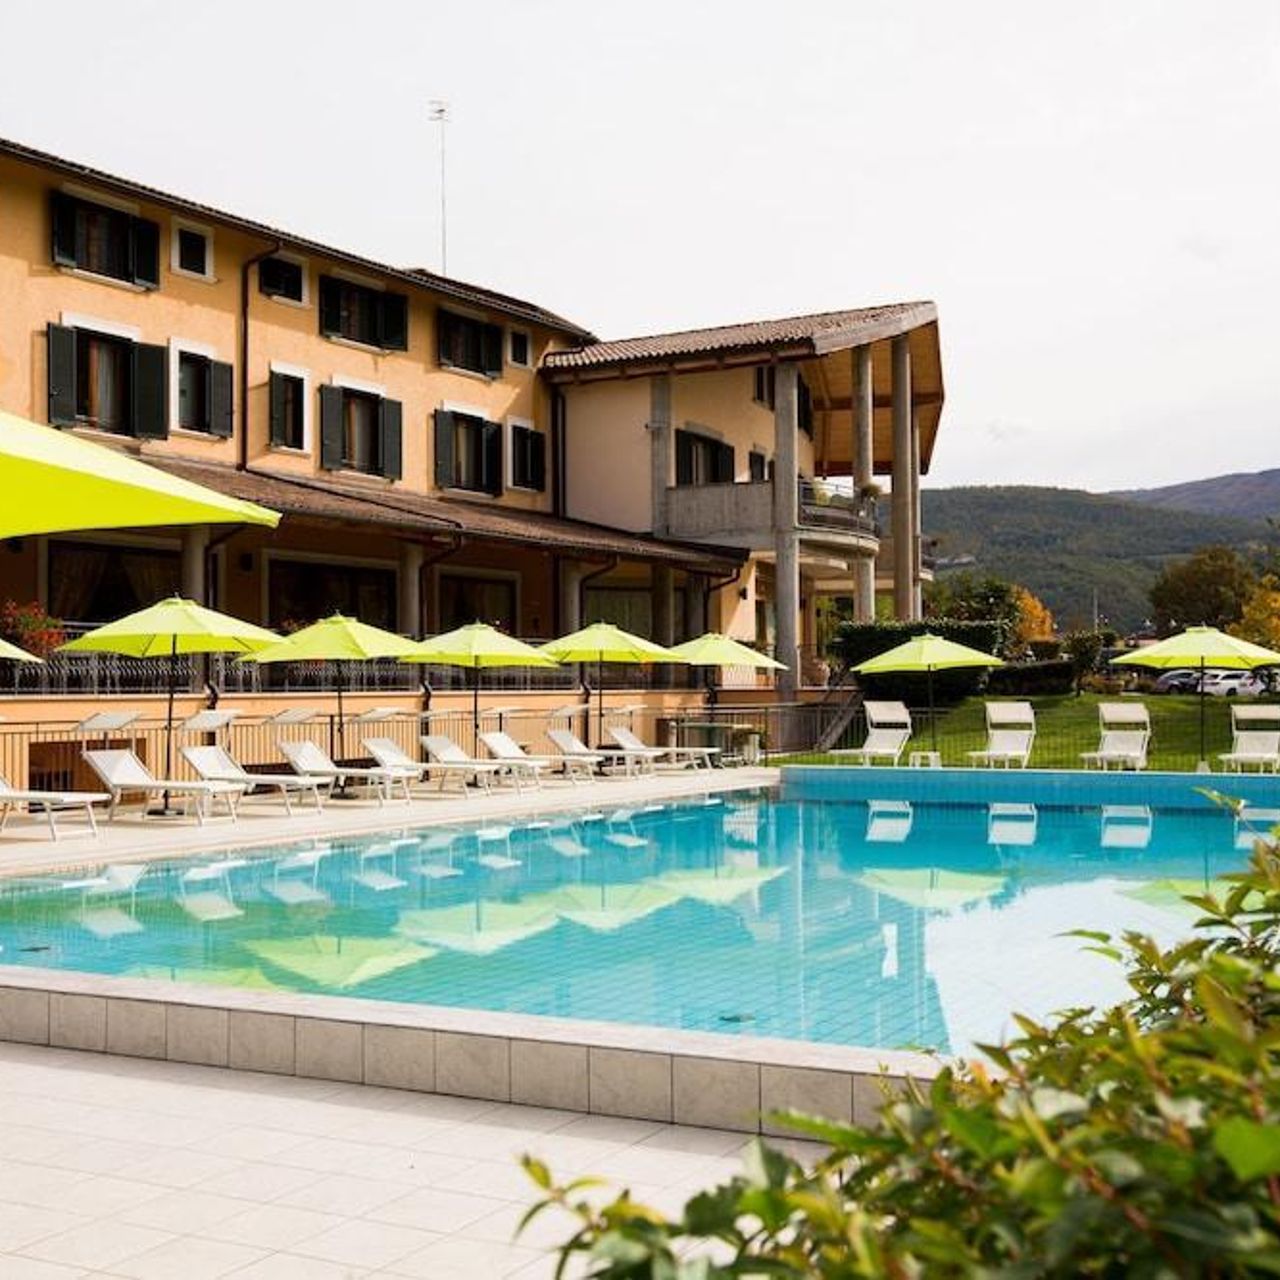 Grand Hotel Elite - Cascia - Great prices at HOTEL INFO